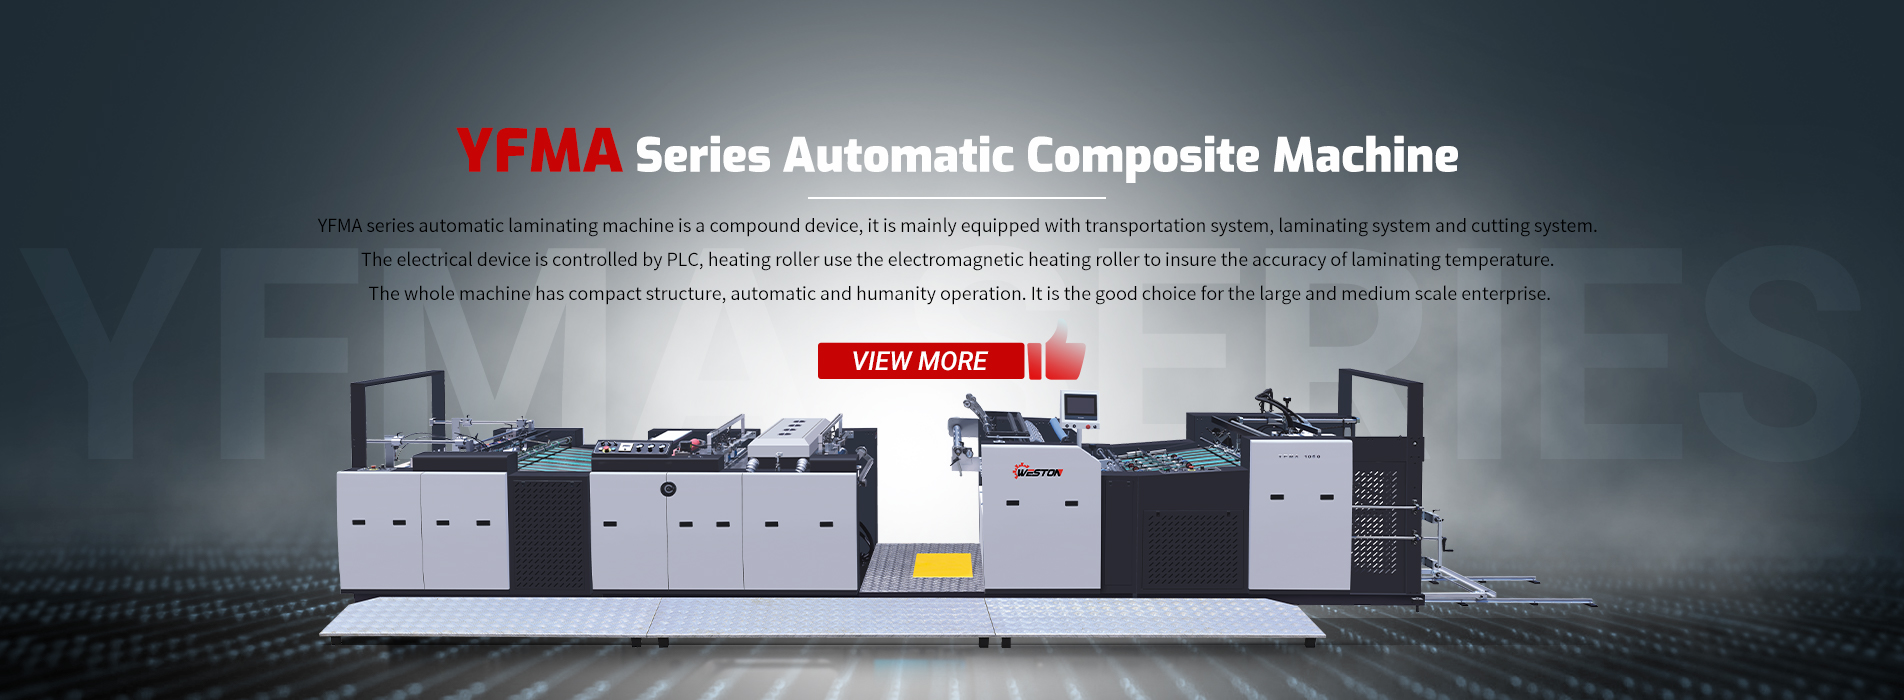 YFMA Series Automatic Composite Machine